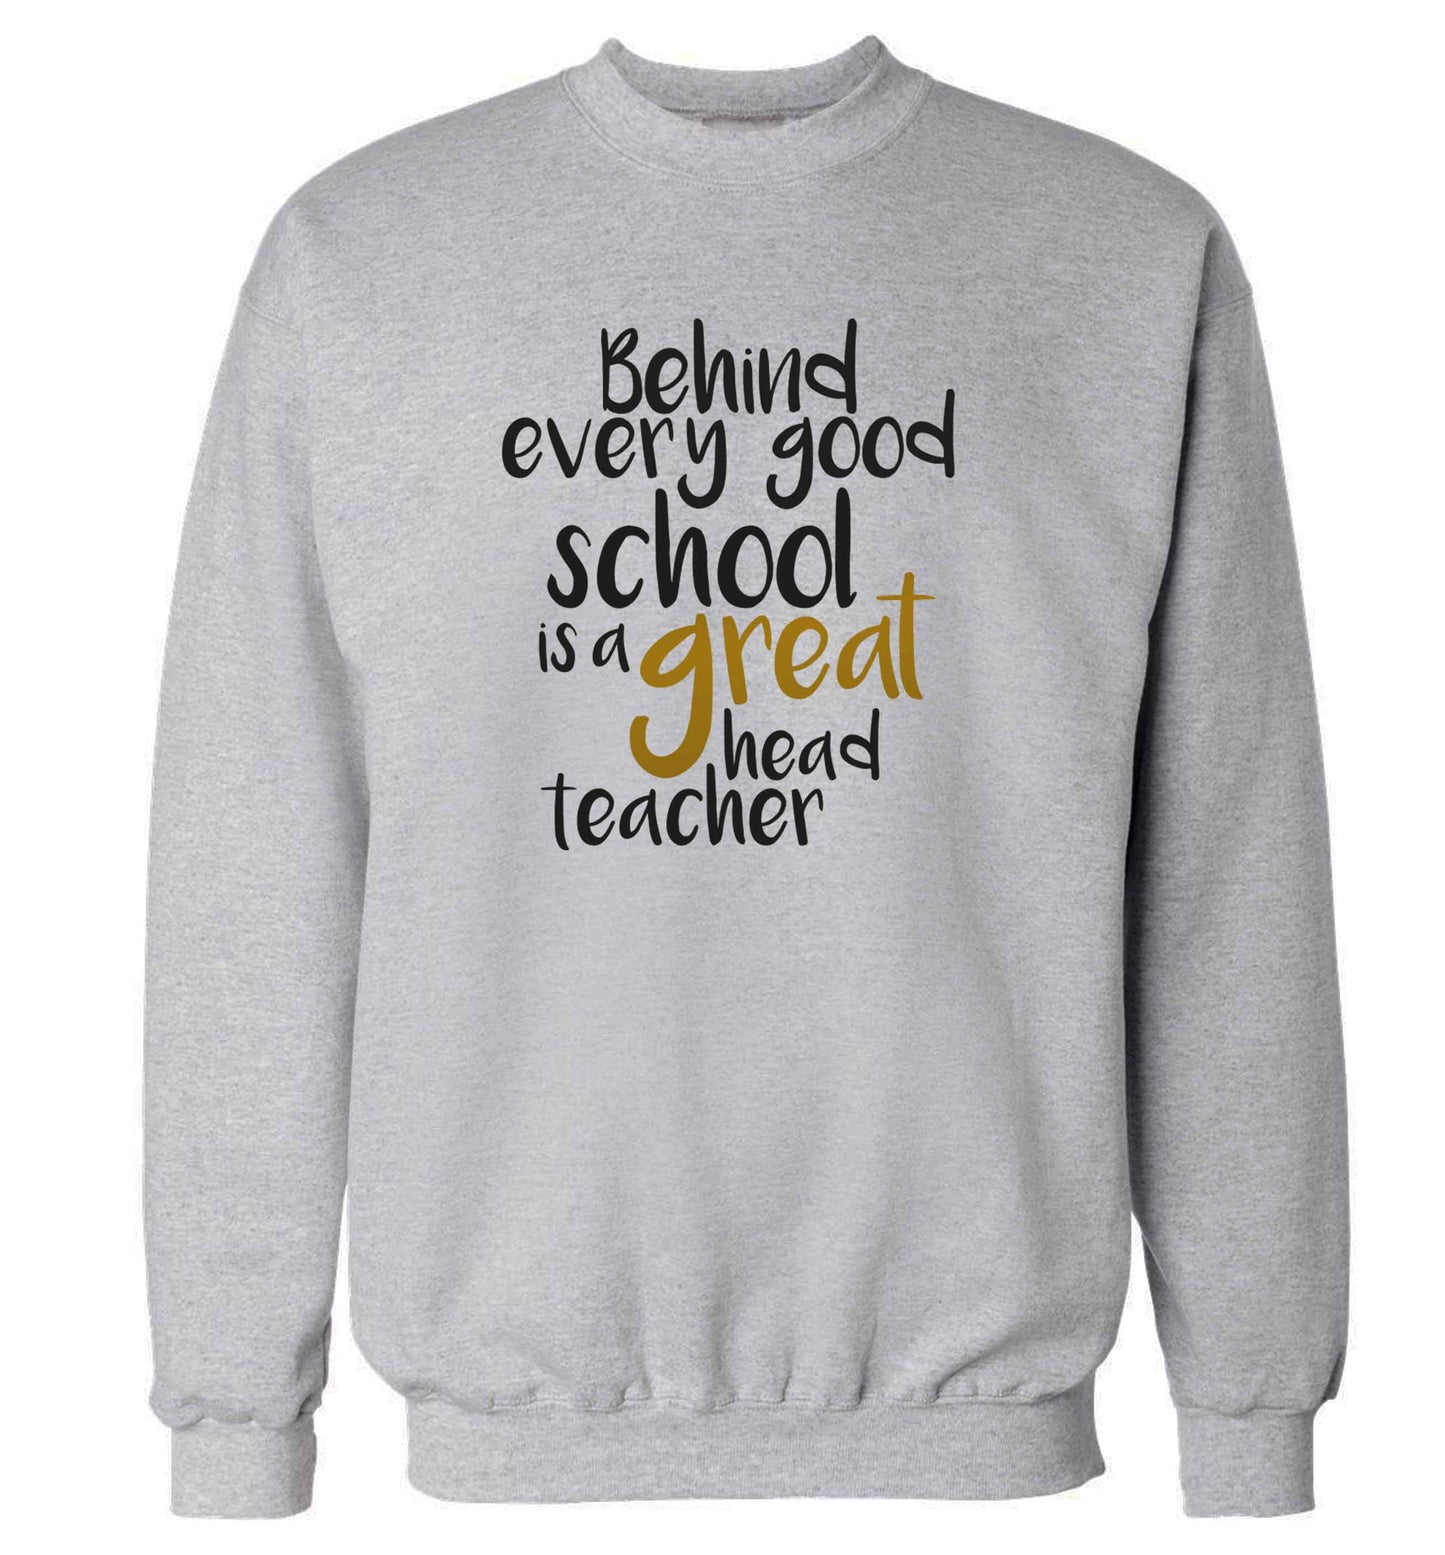 Behind every good school is a great head teacher adult's unisex grey sweater 2XL